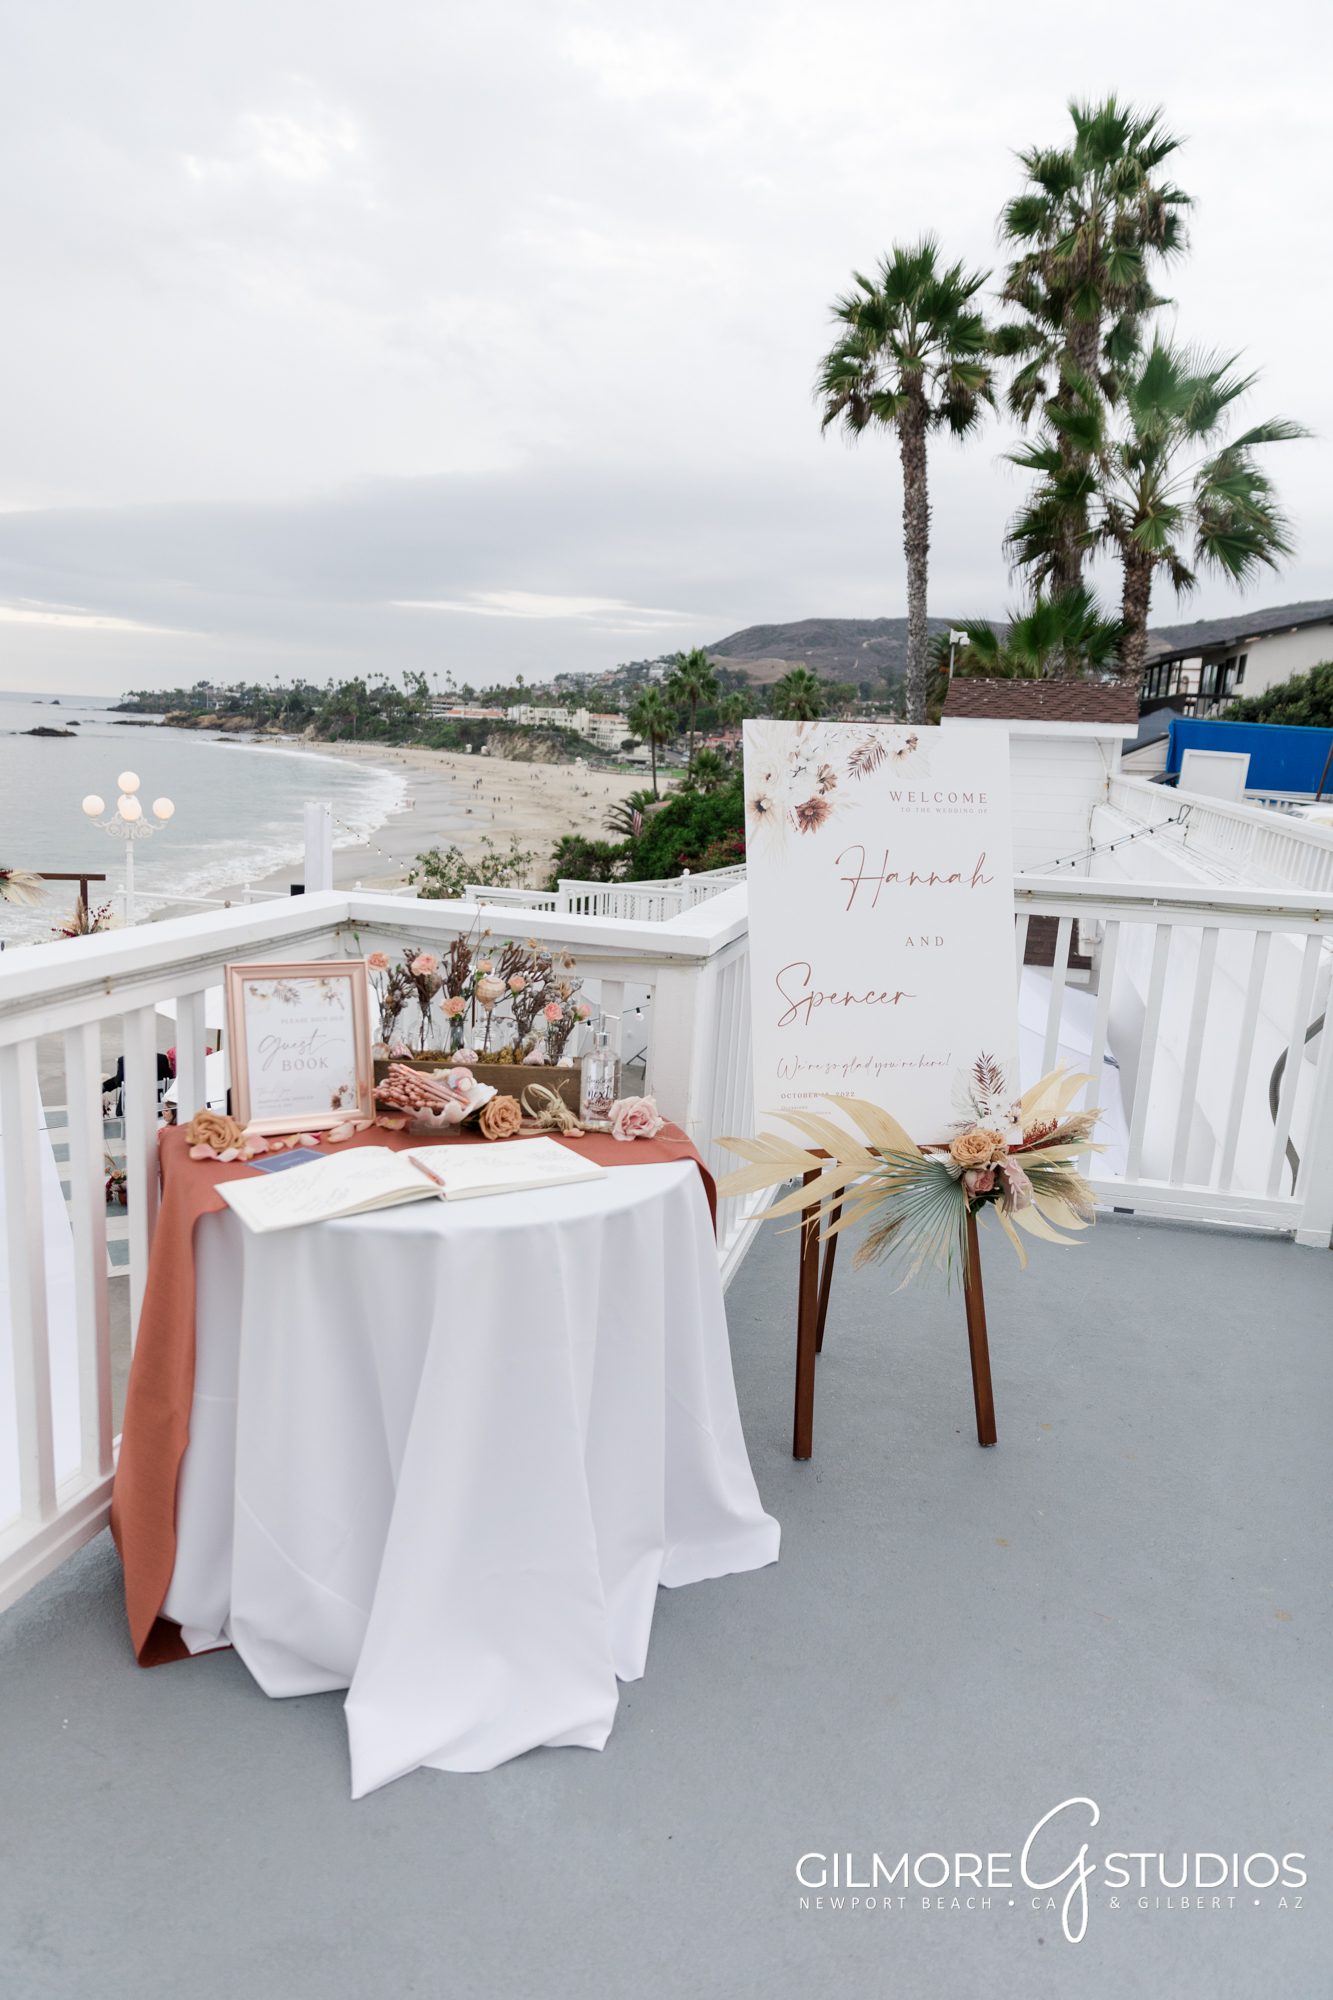 Occasions at Laguna Village wedding photography Laguna Beach, CA wedding venue - Gilmore Studios - guest book table - ocean view